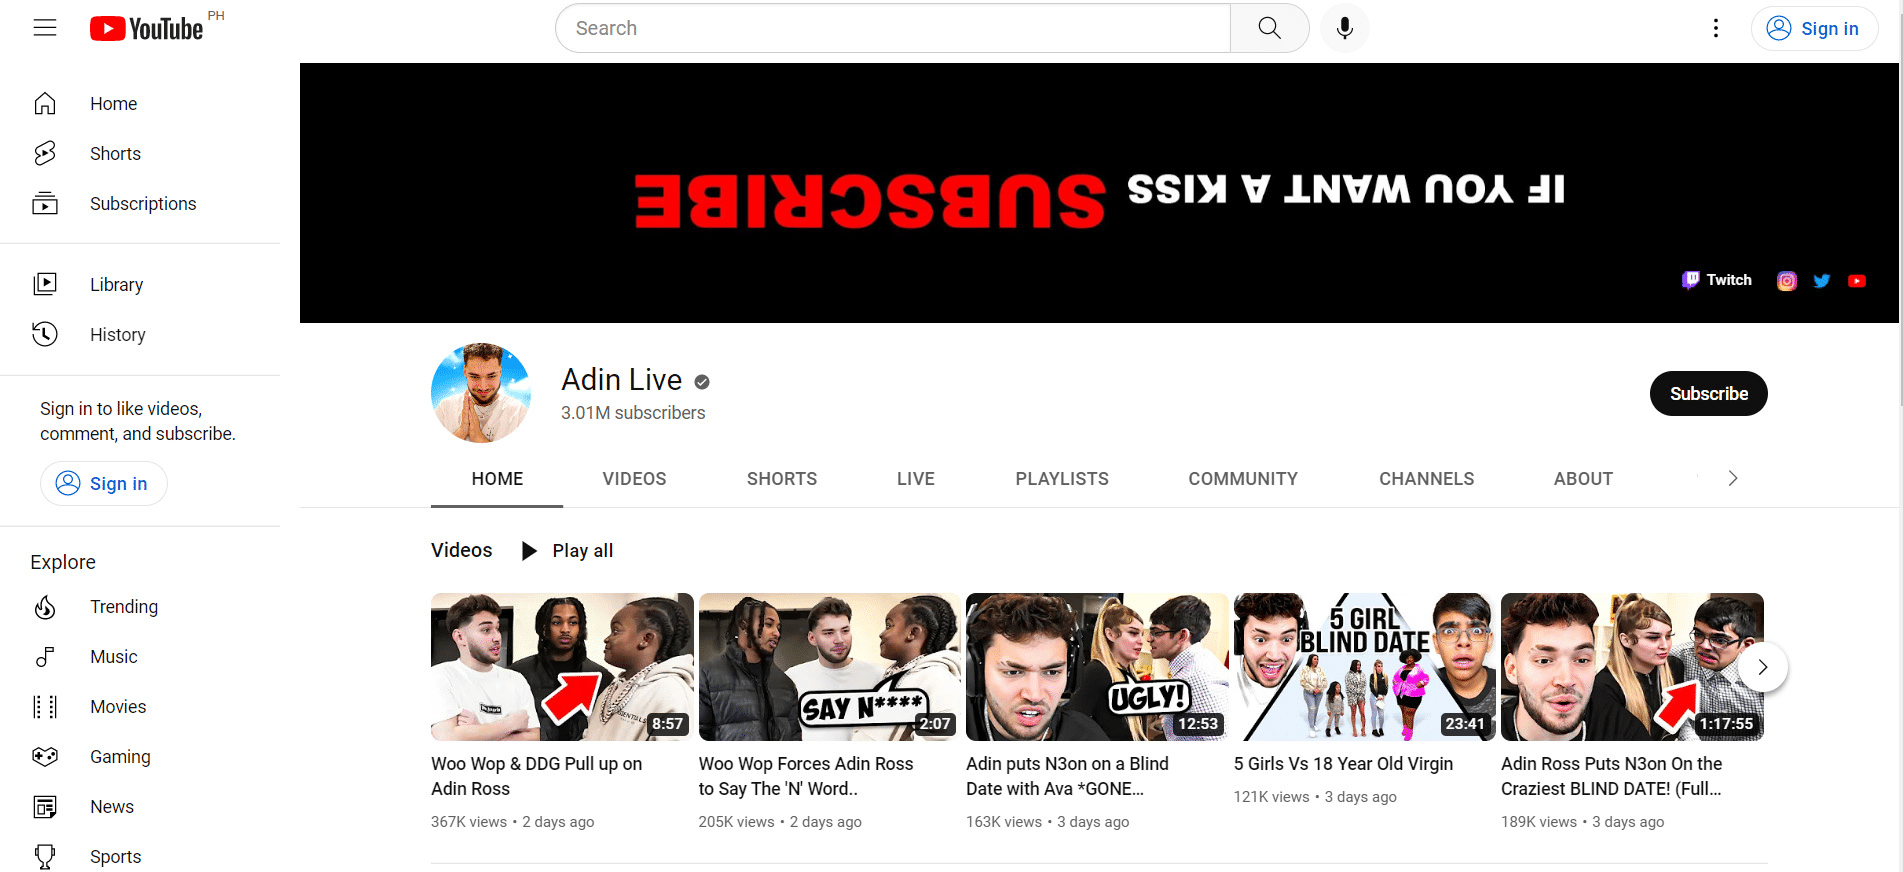 AdinRoss YouTube Channel | YouTube.com